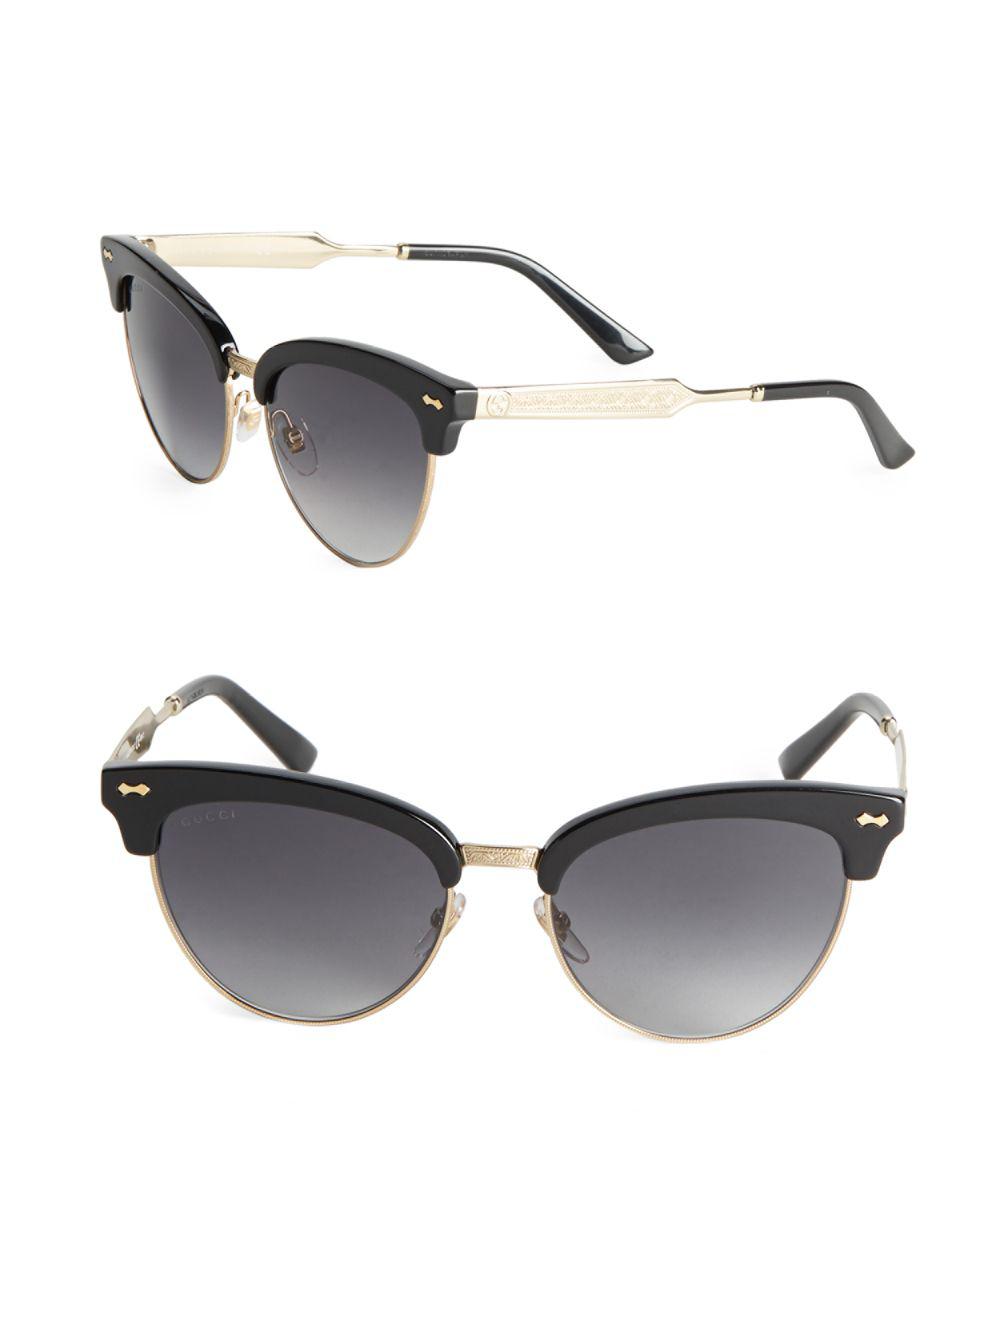 Gucci 55mm Clubmaster Sunglasses in Black Gold (Metallic) - Lyst